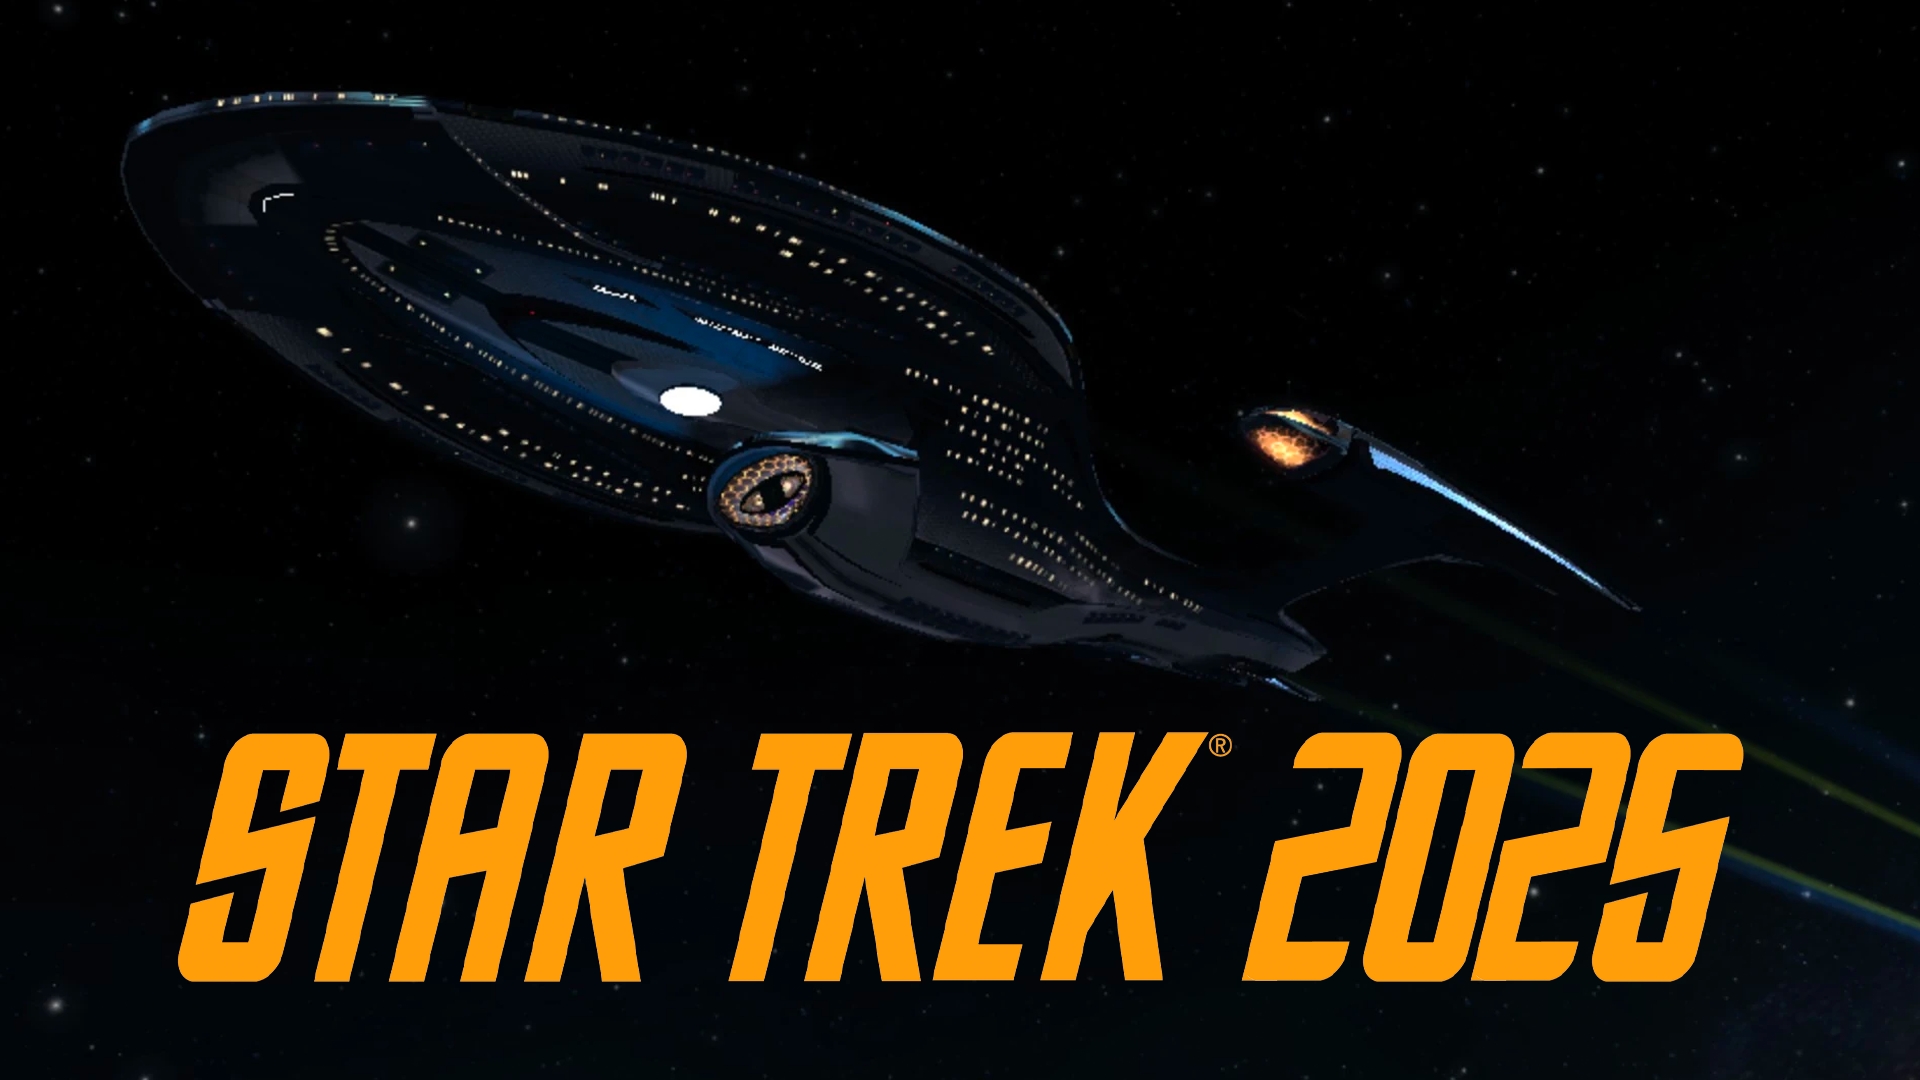 Buy Star Trek 2025 Other